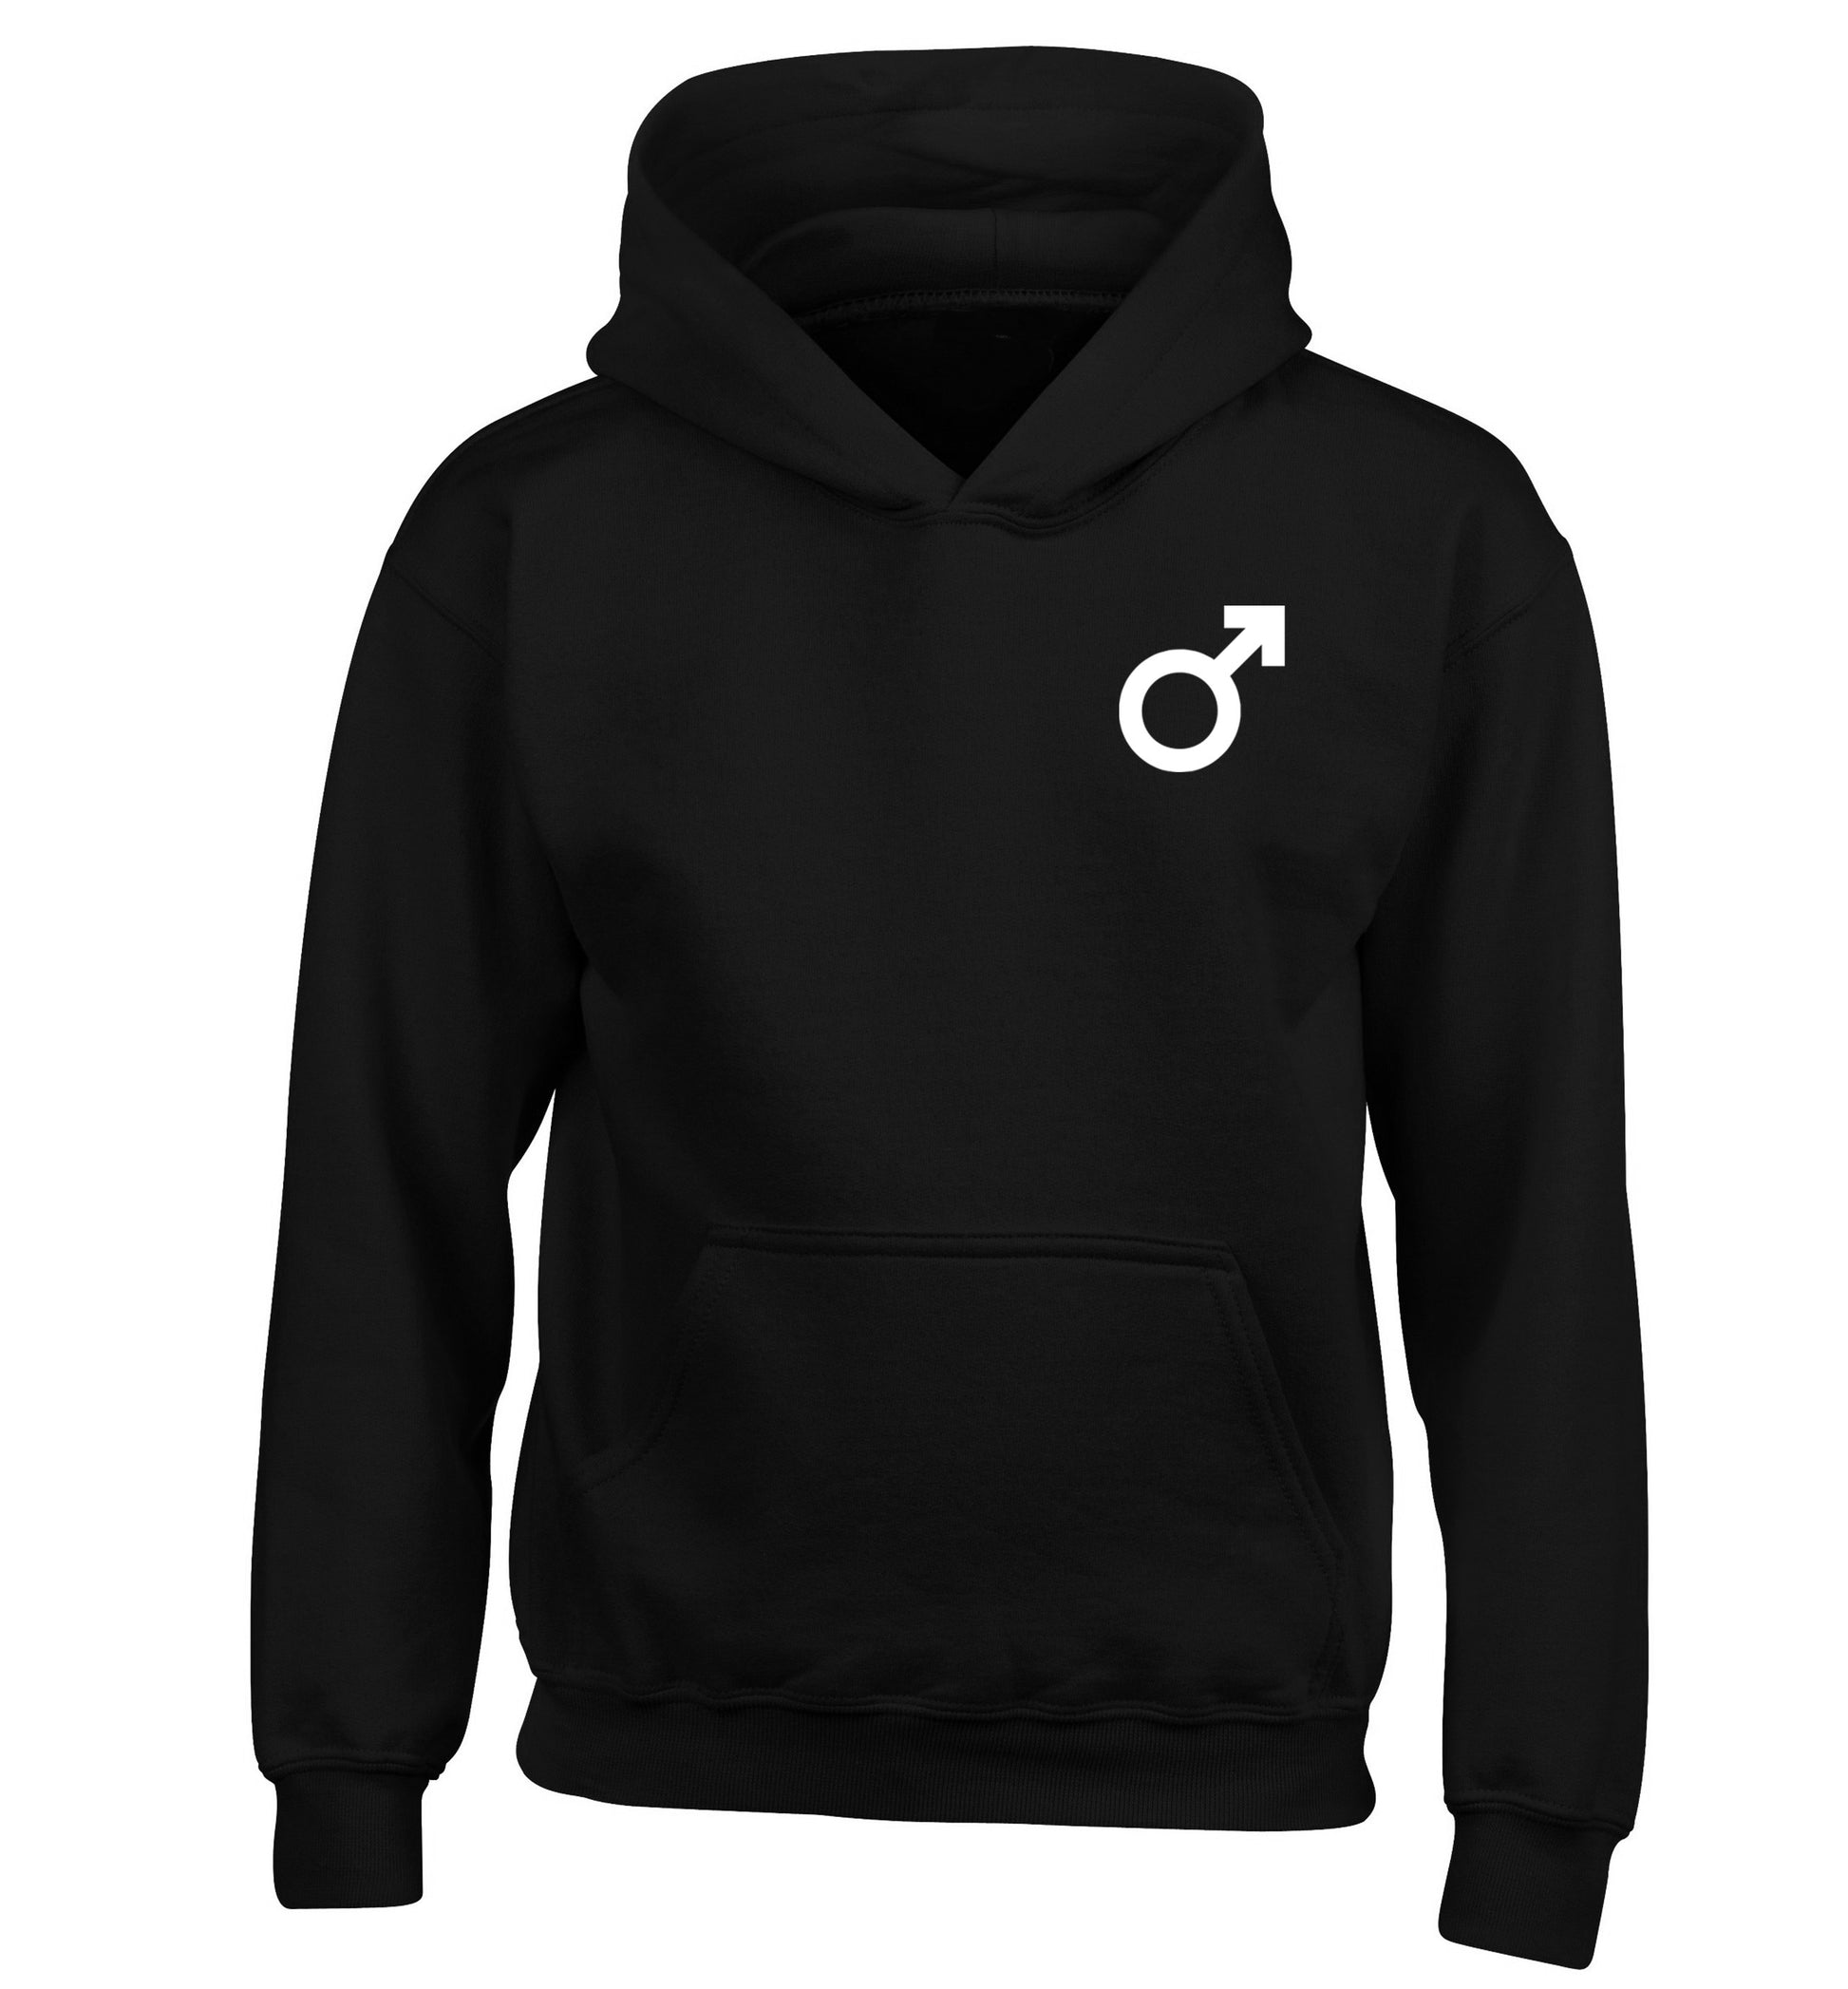 Male symbol pocket children's black hoodie 12-14 Years